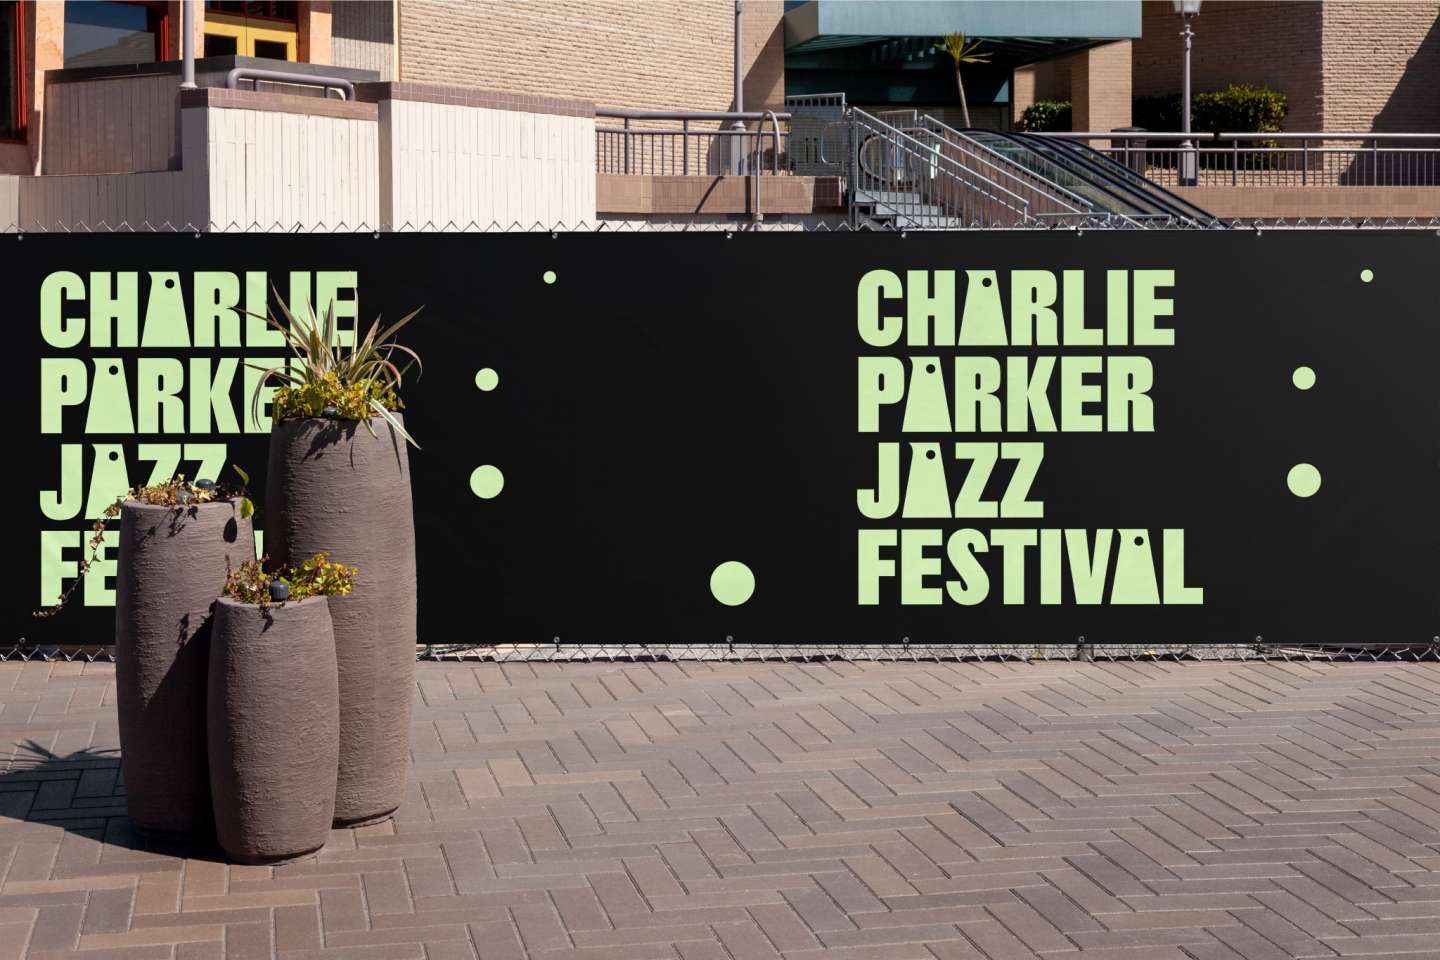 Charlie Parker Jazz Festival